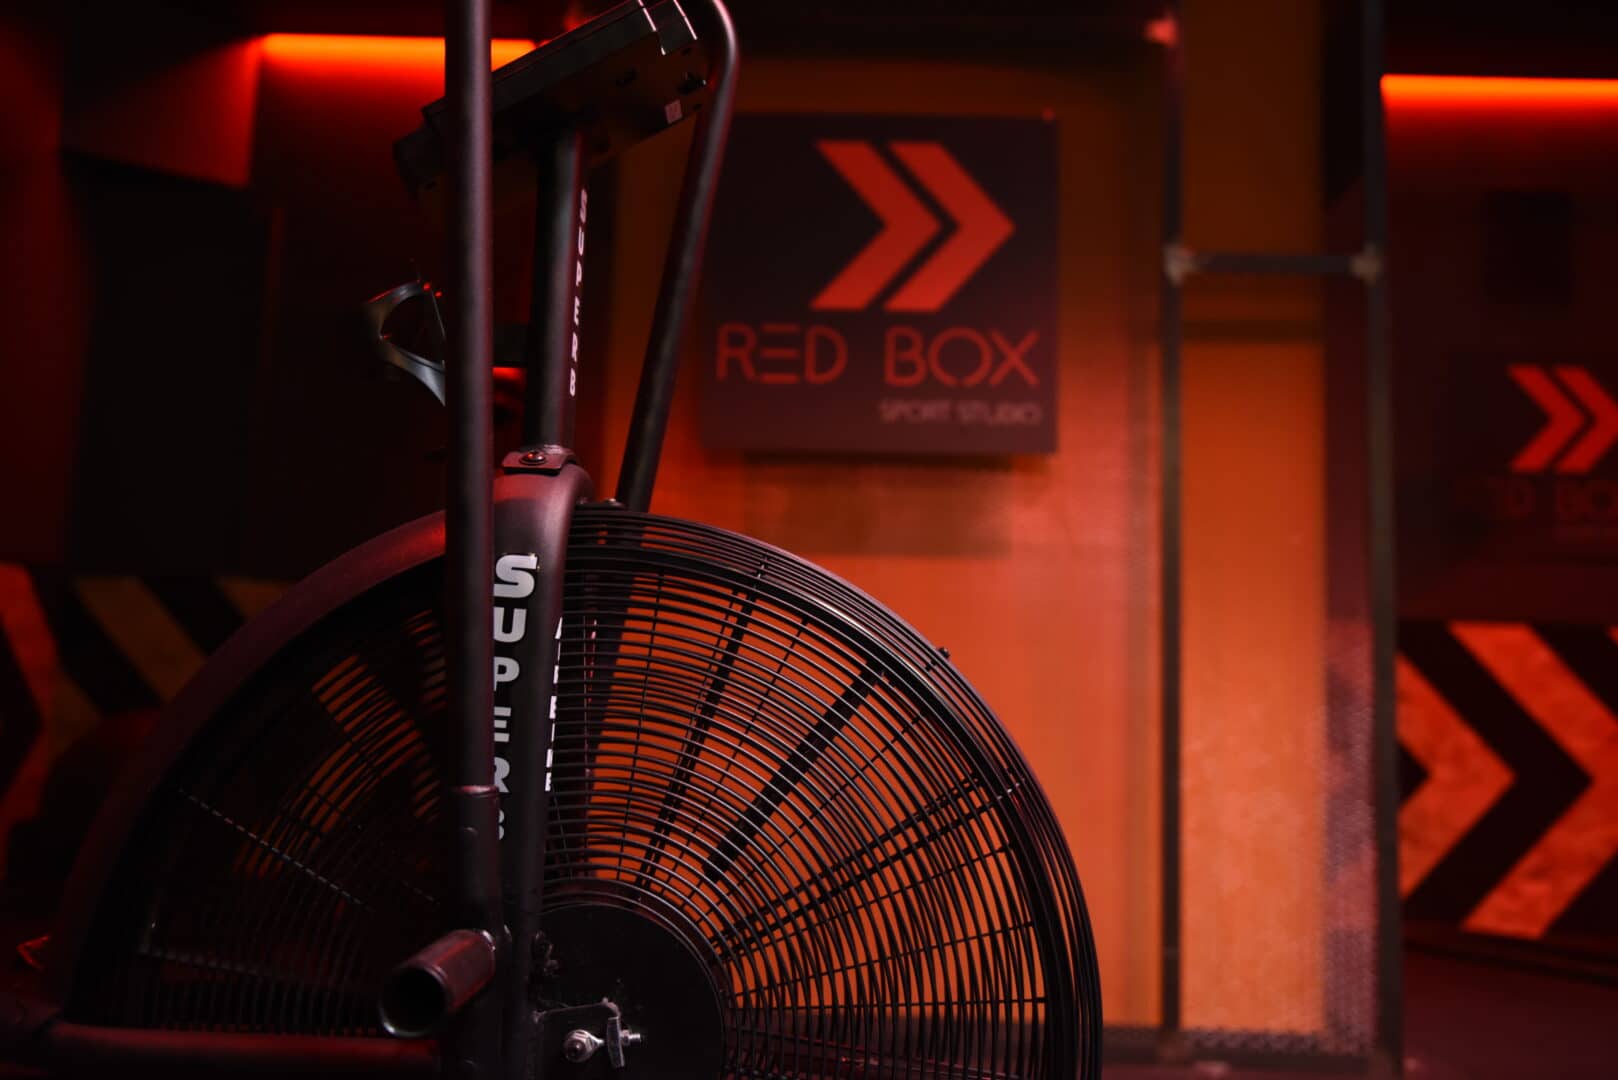 Red Box Sport Studio